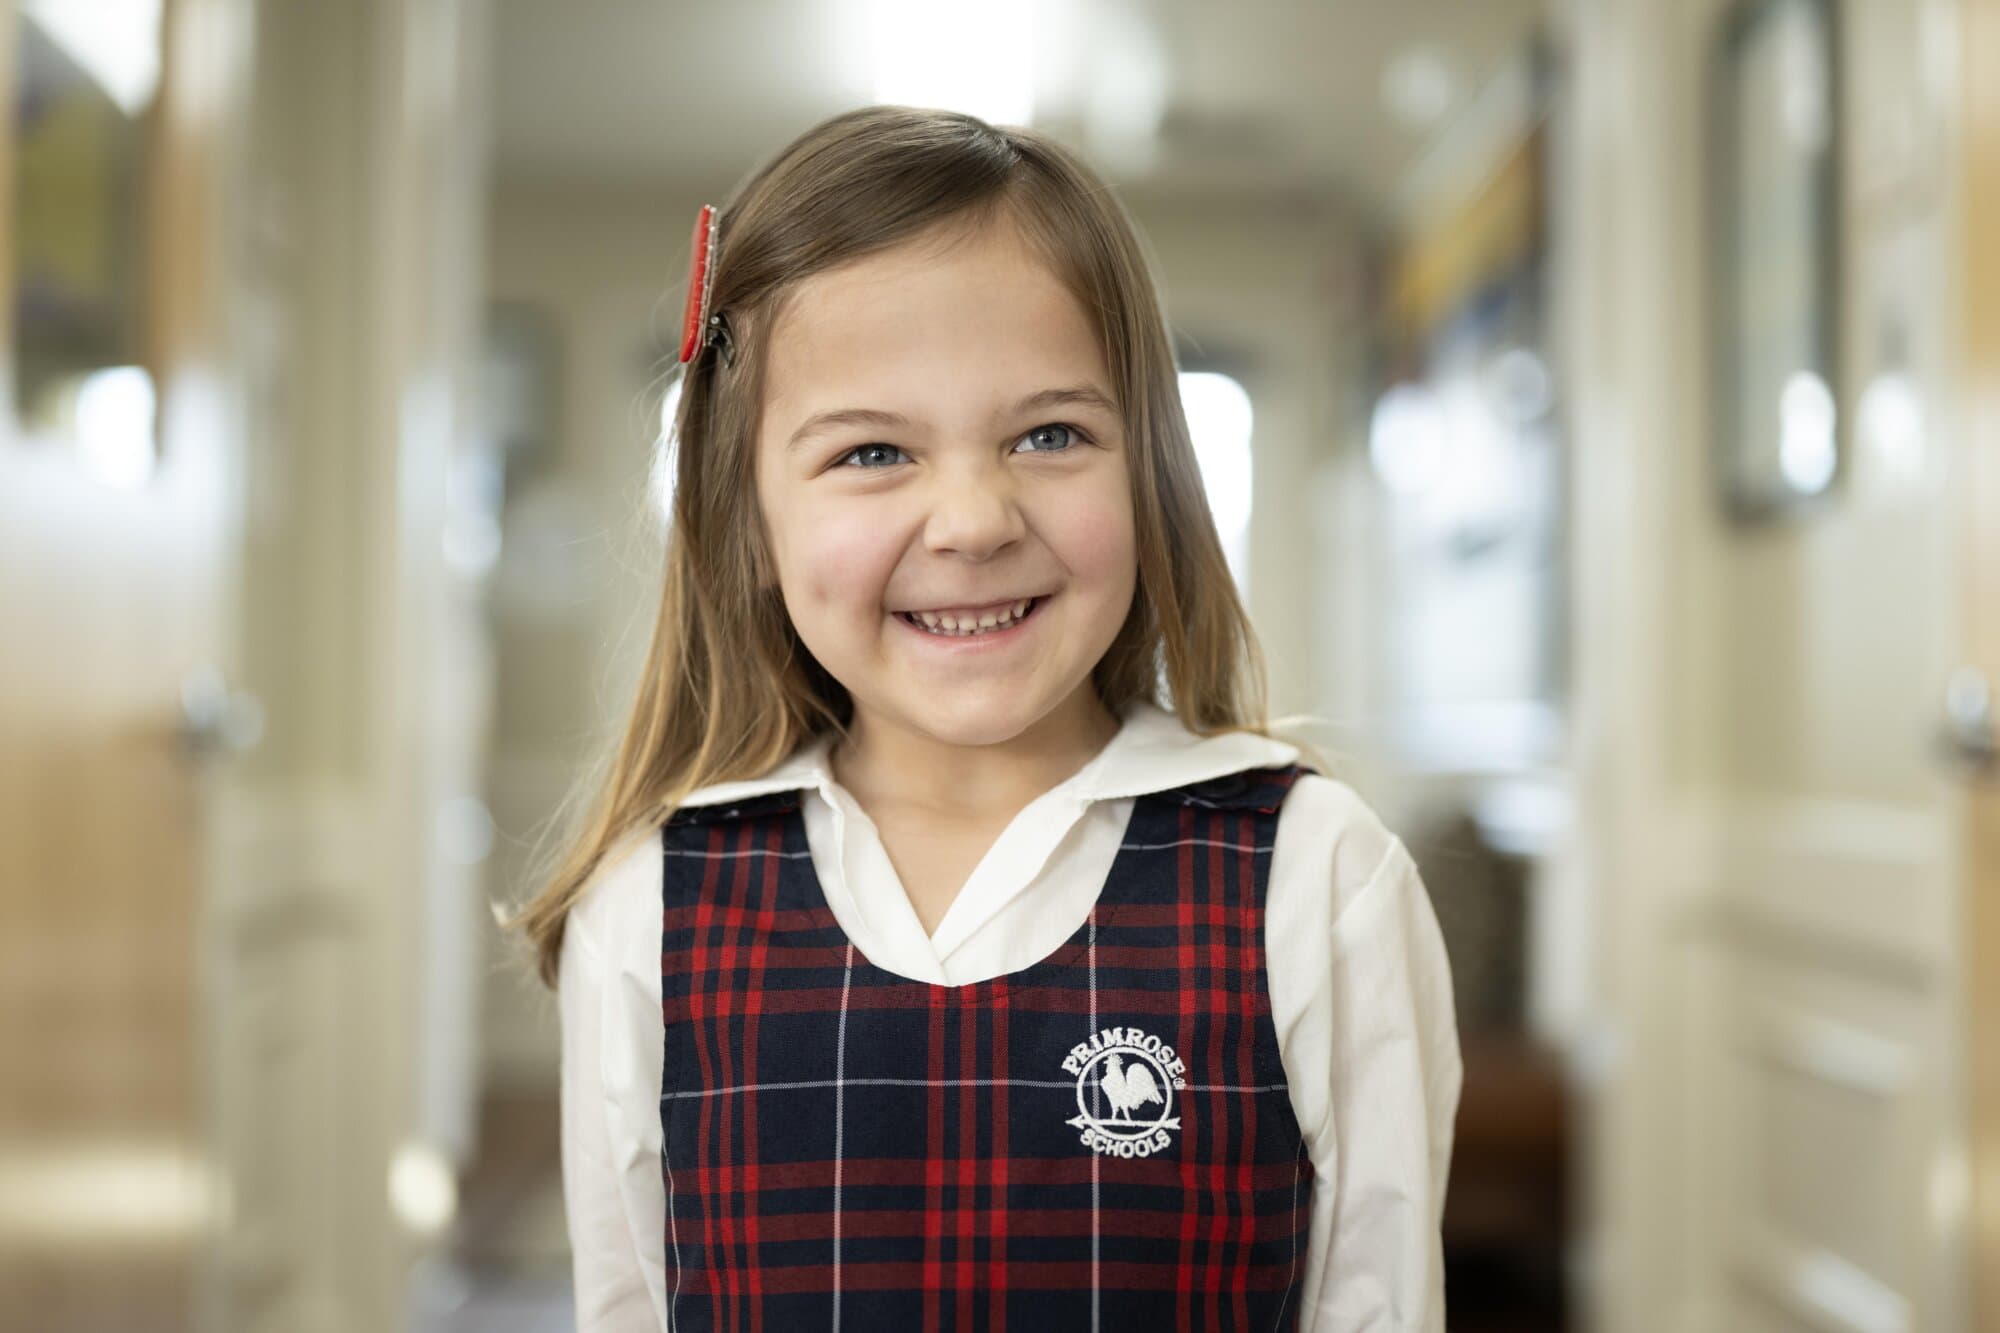 pre-k child smiling in a primrose uniform